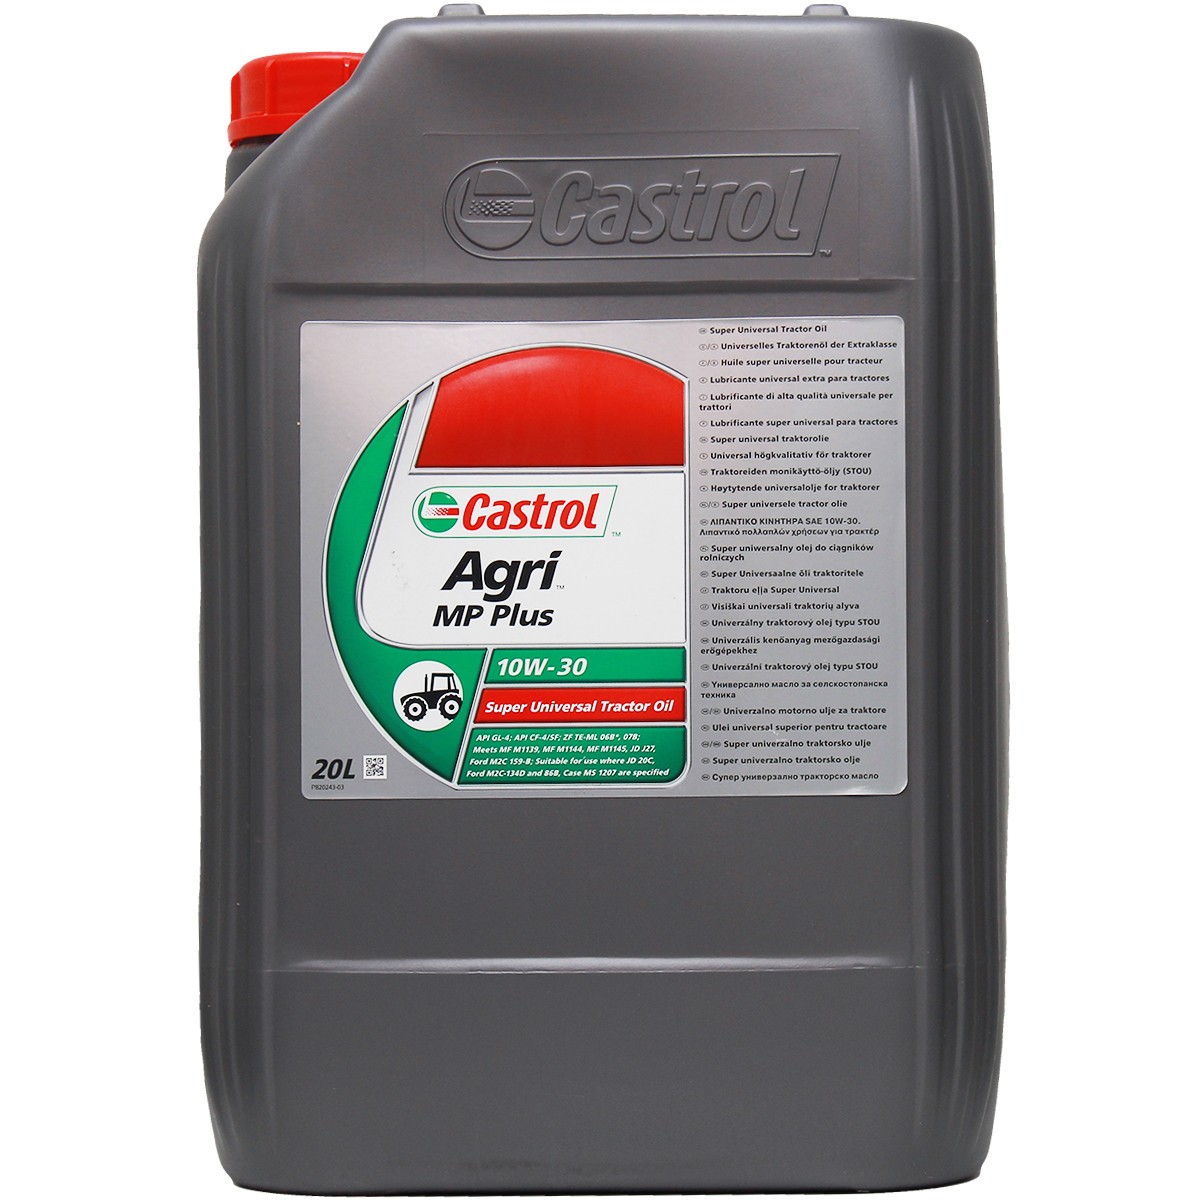 CASTROL Agri, MP Plus 10W-30, 20l Motor oil 14A96D buy